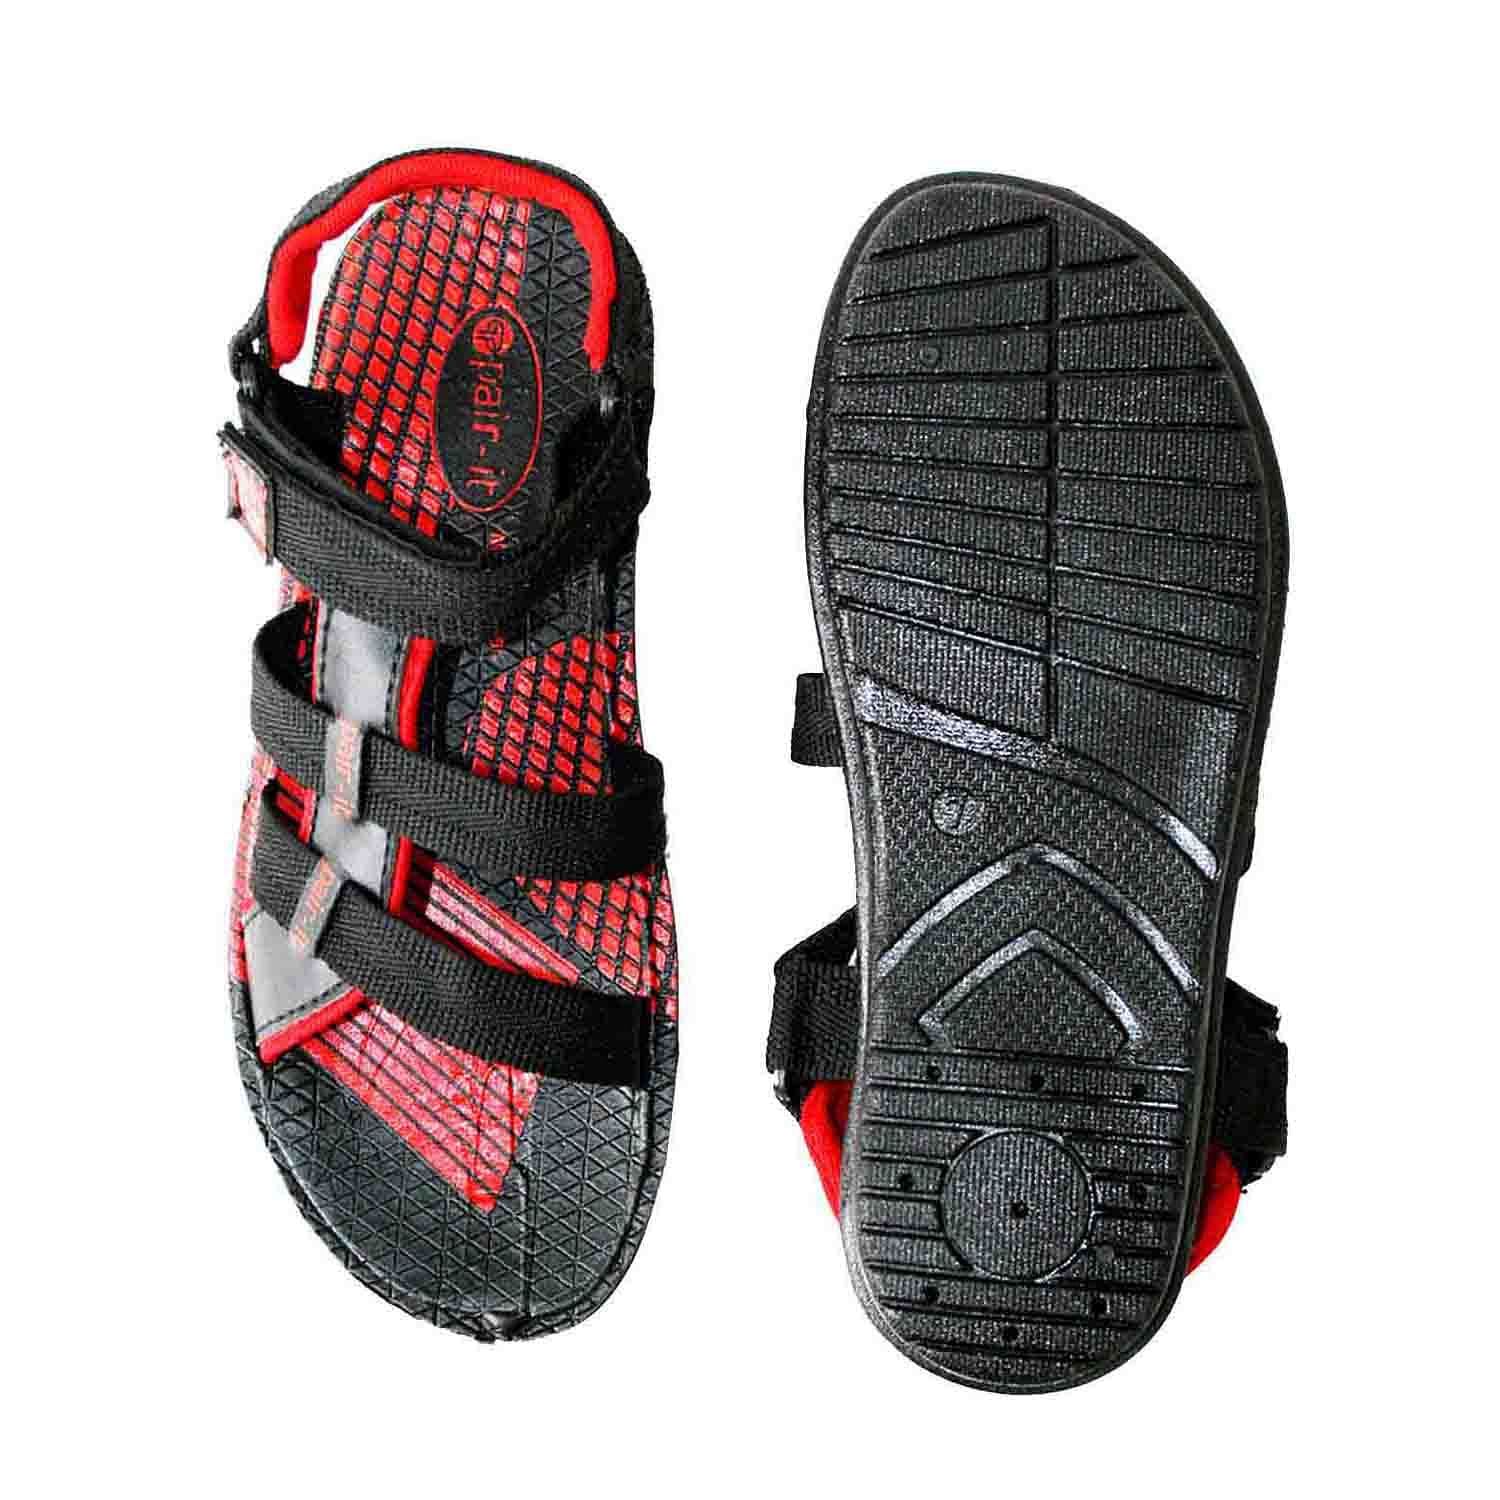 Pair-it Mn Sandals-RE-Gladio110-Black/Red